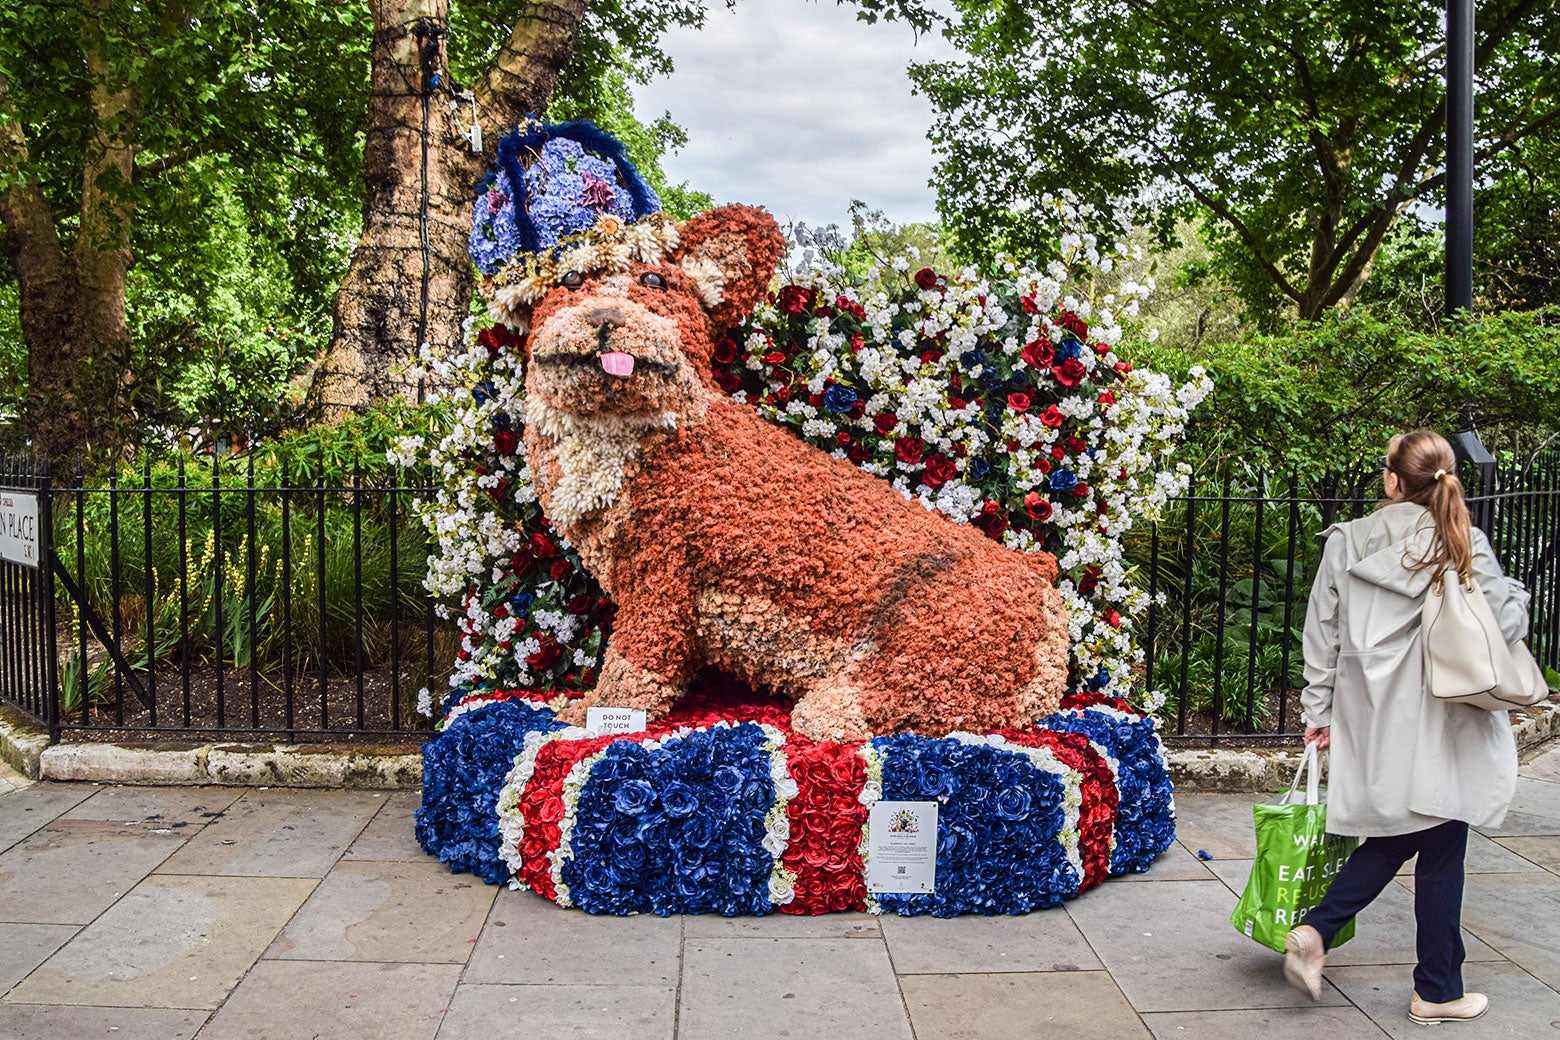 A big floral sculpture of the dog Clarence the Corgi. 